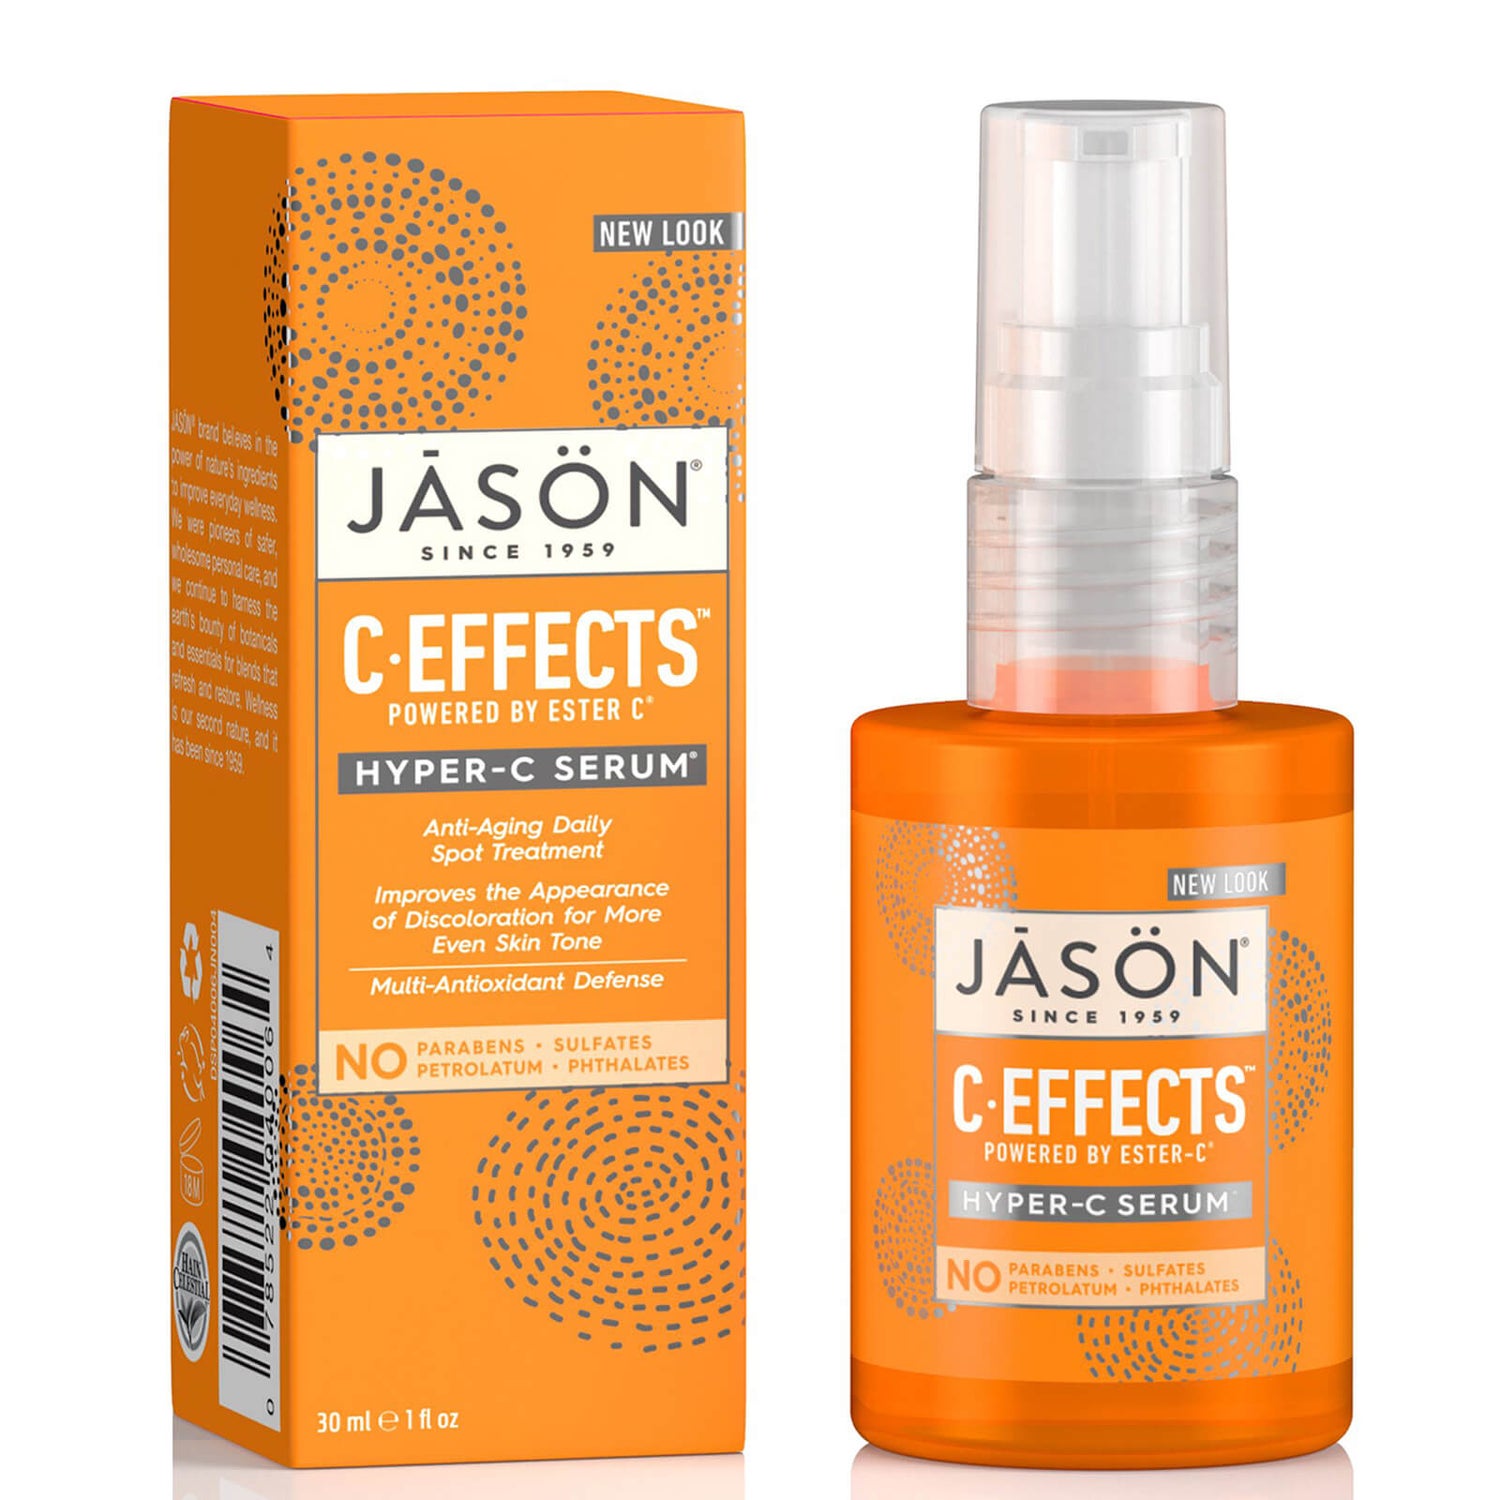 JASON C-EFFECTS Hyper-C Serum (1 oz.)